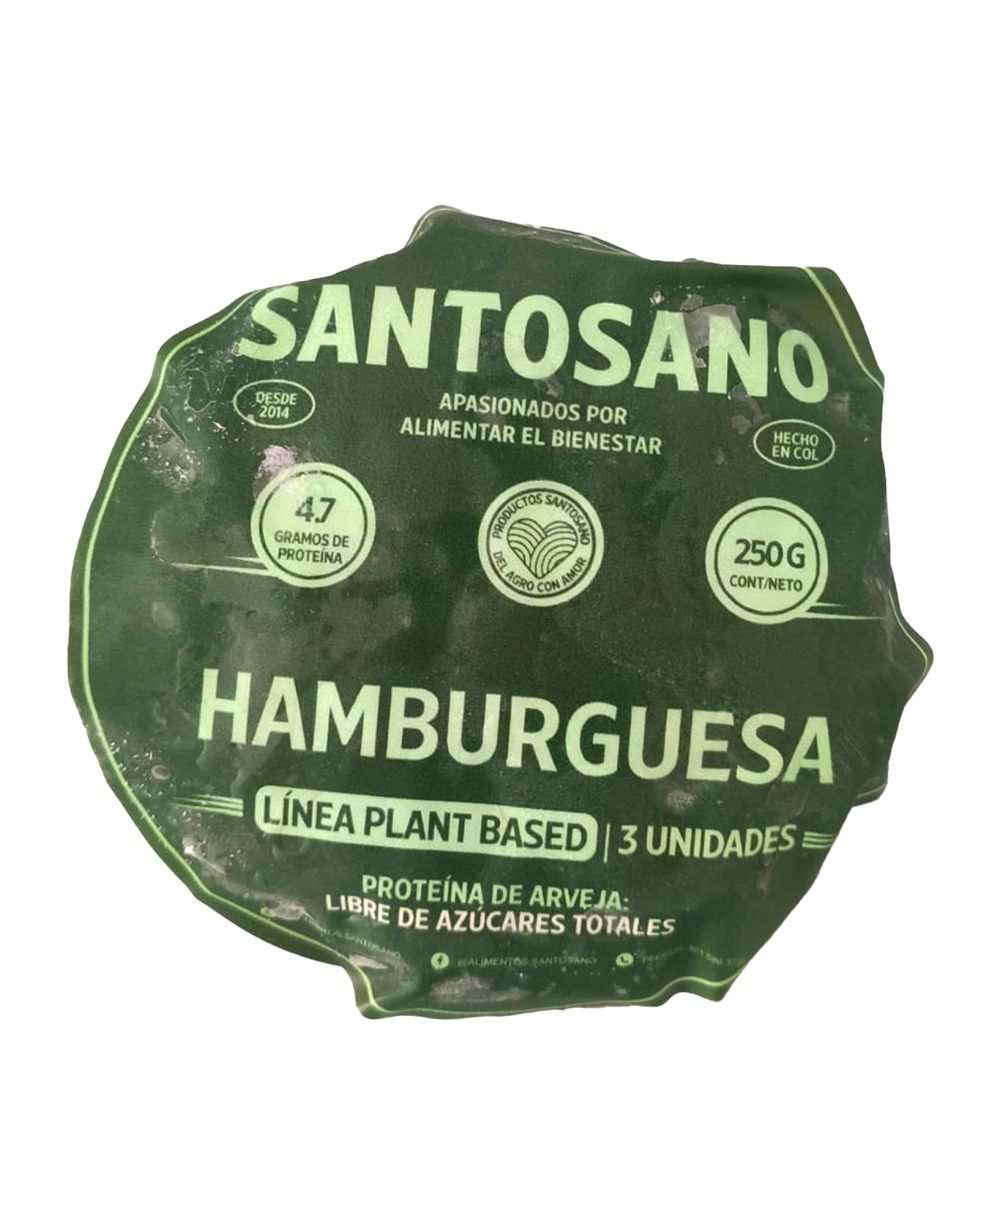 12756-Hamburguesa-Plant-Based-x3-Unidades-Santosano-Frente.jpg